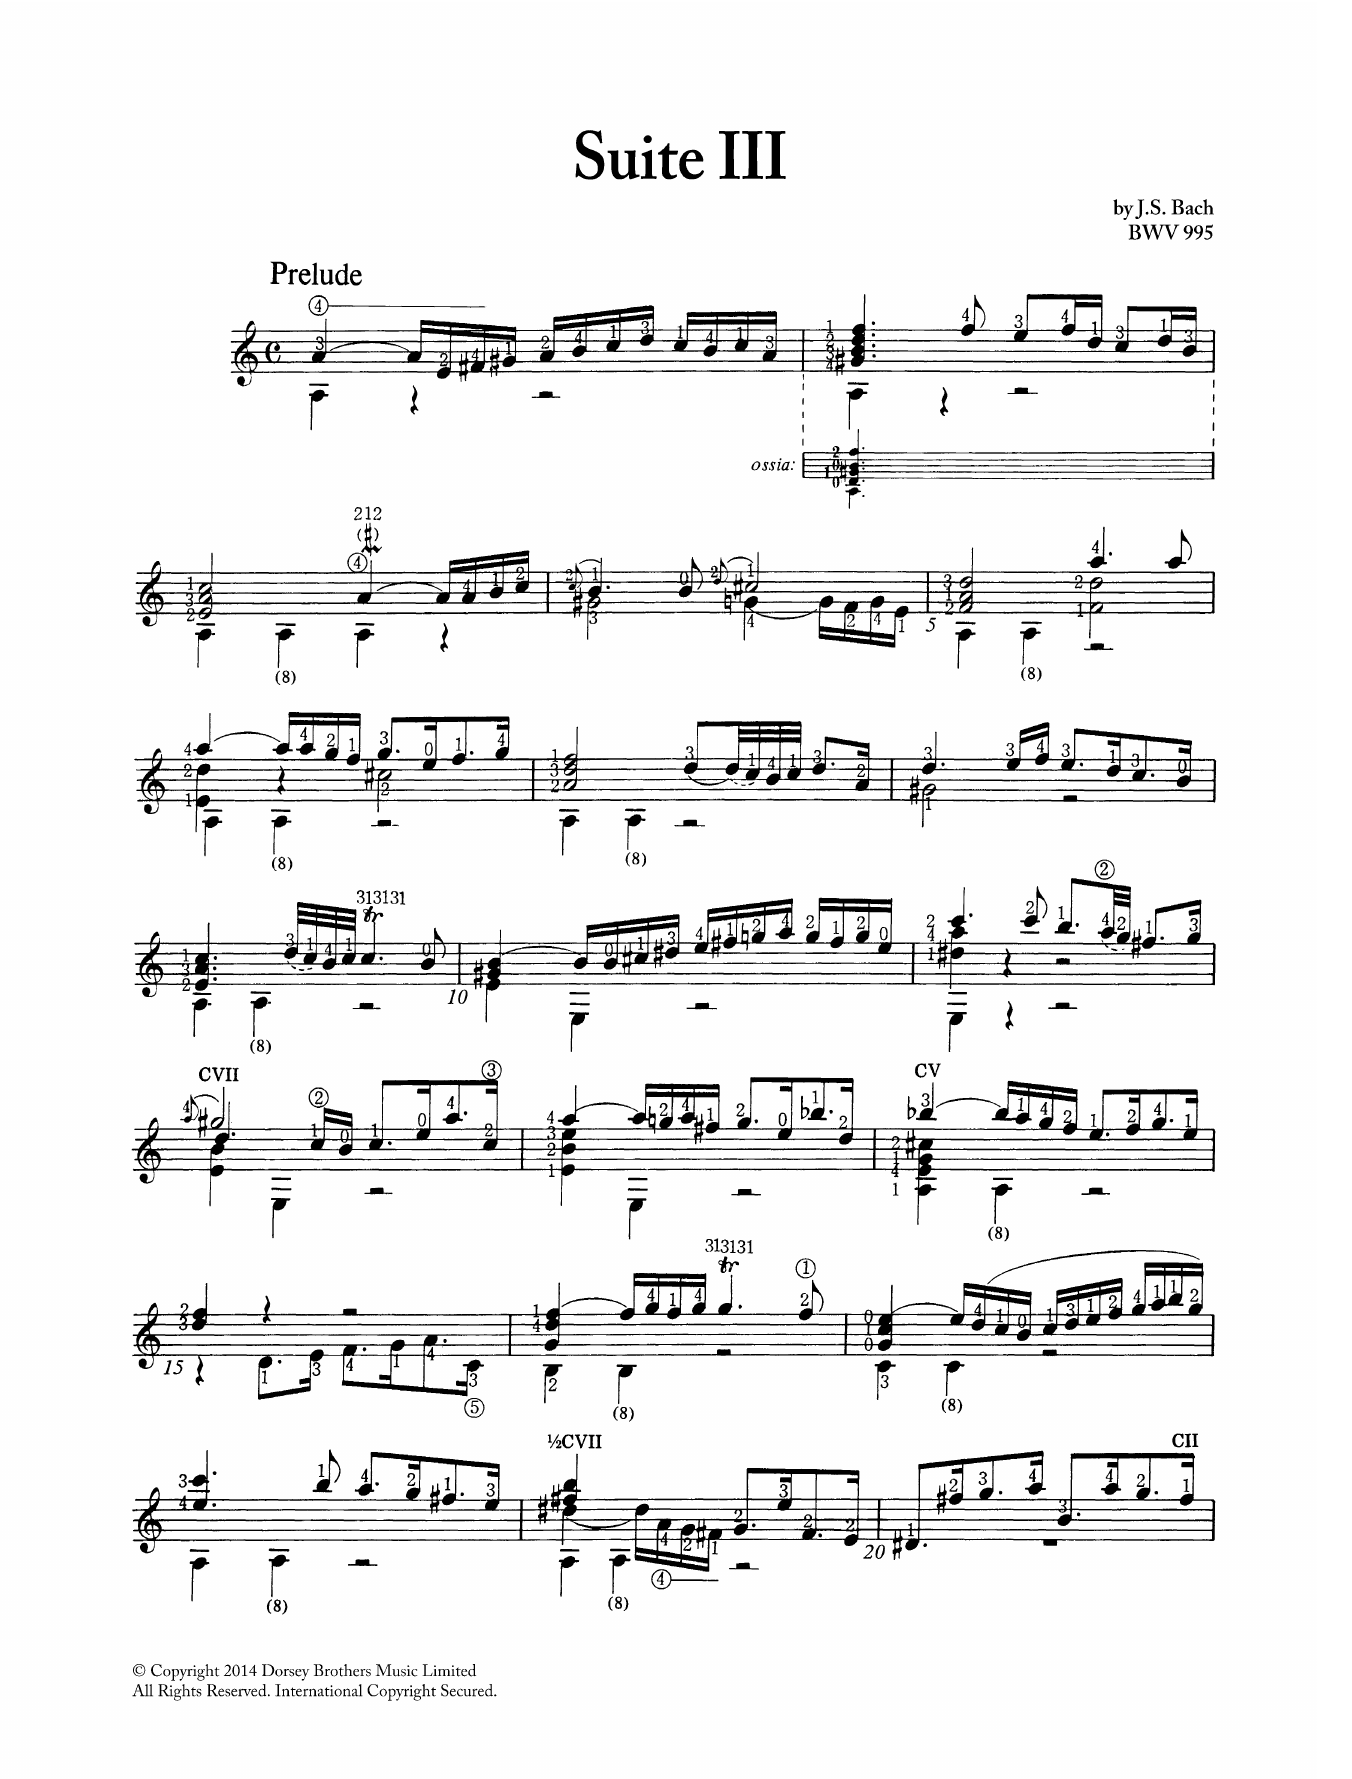 Johann Sebastian Bach Suite In Gm BWV 995 Sheet Music Notes & Chords for Guitar - Download or Print PDF